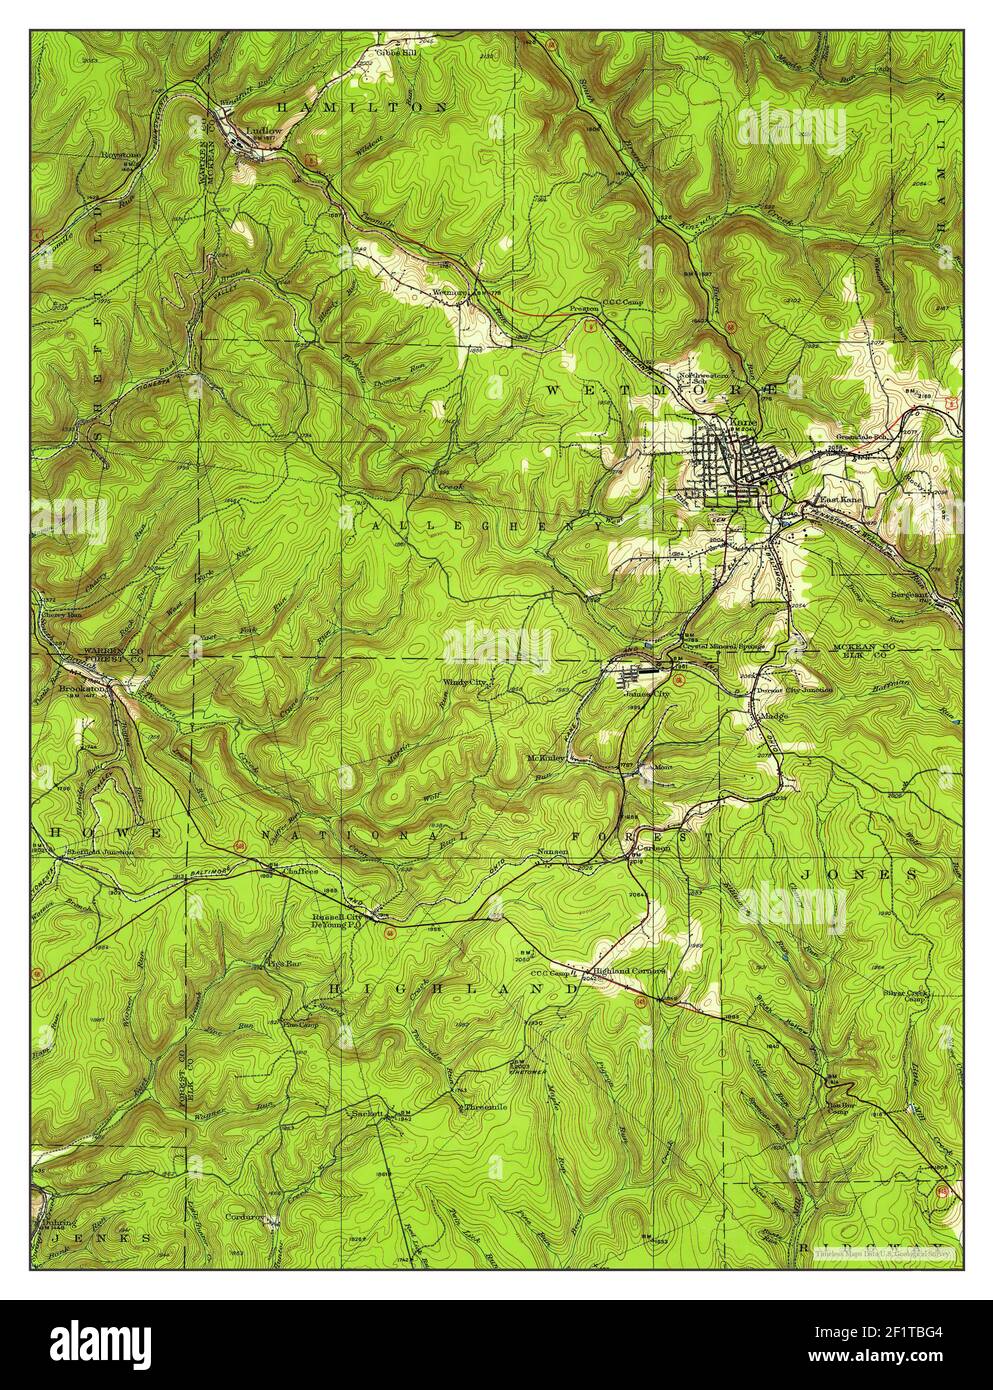 Kane, Pennsylvania, map 1934, 1:62500, United States of America by Timeless Maps, data U.S. Geological Survey Stock Photo